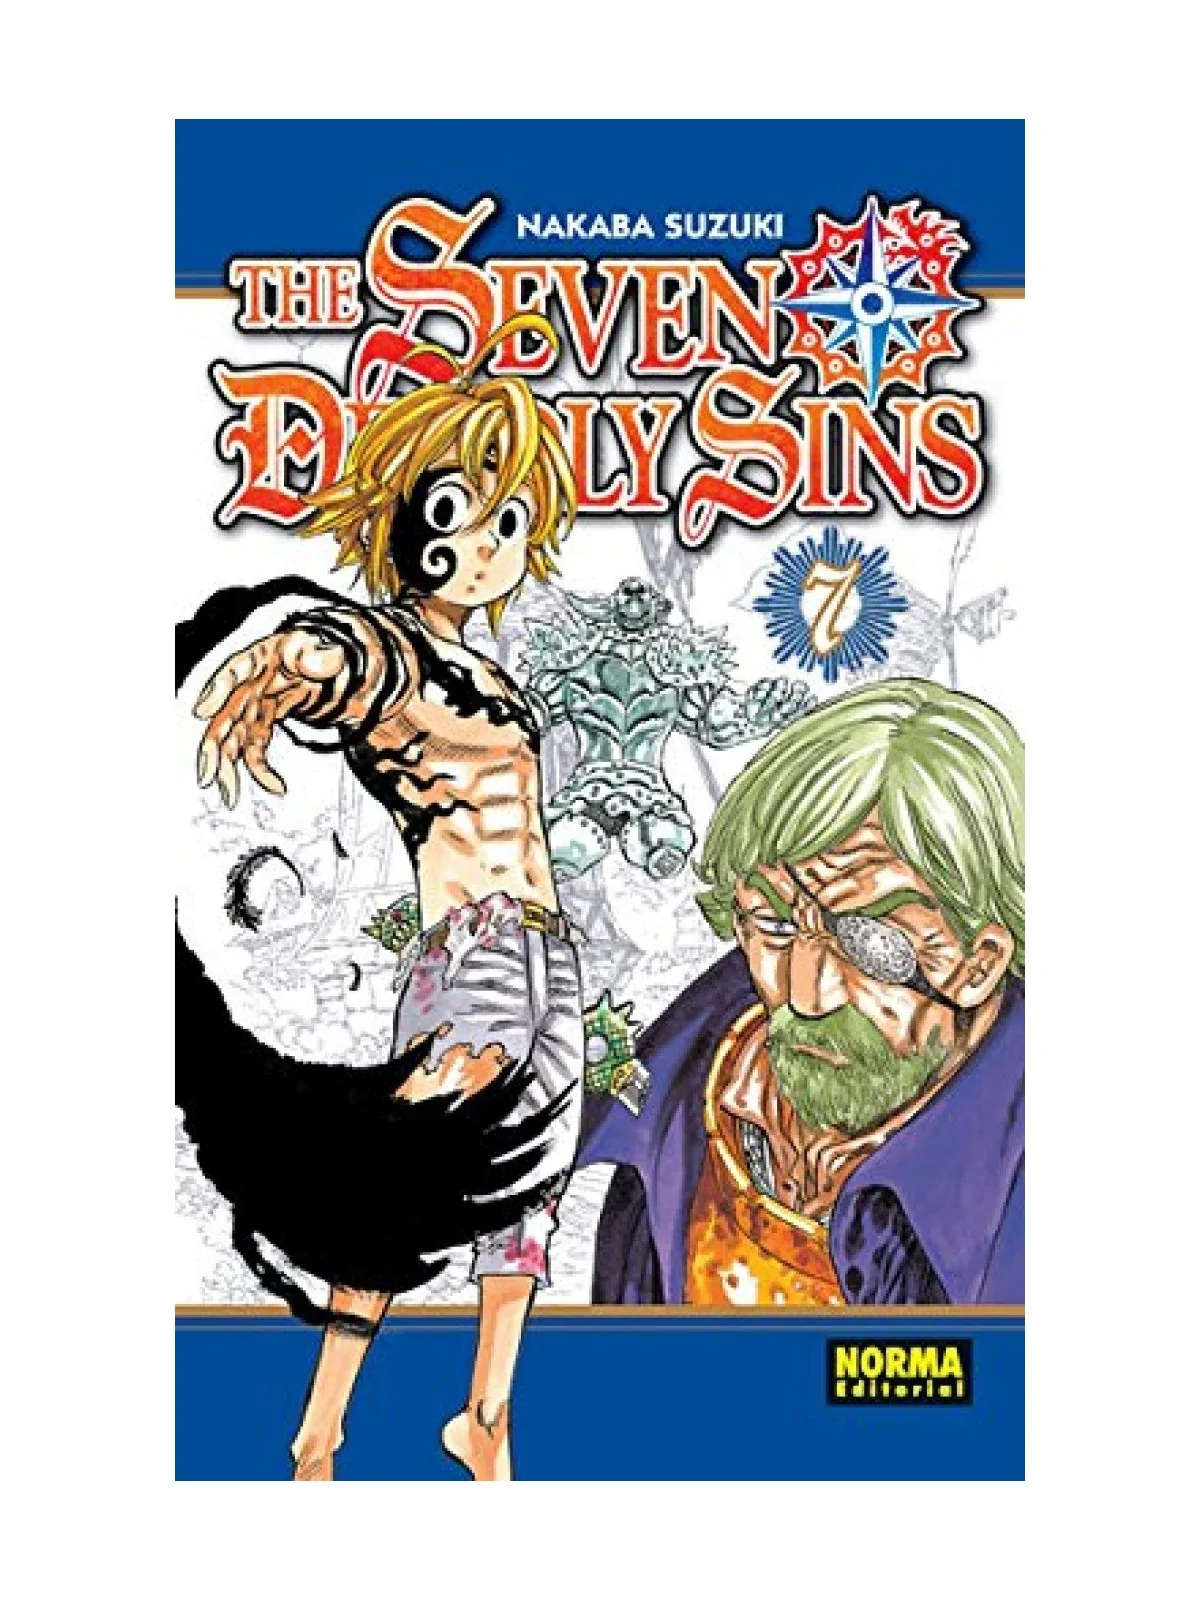 Comprar The Seven Deadly Sins barato al mejor precio 7,60 € de Norma E